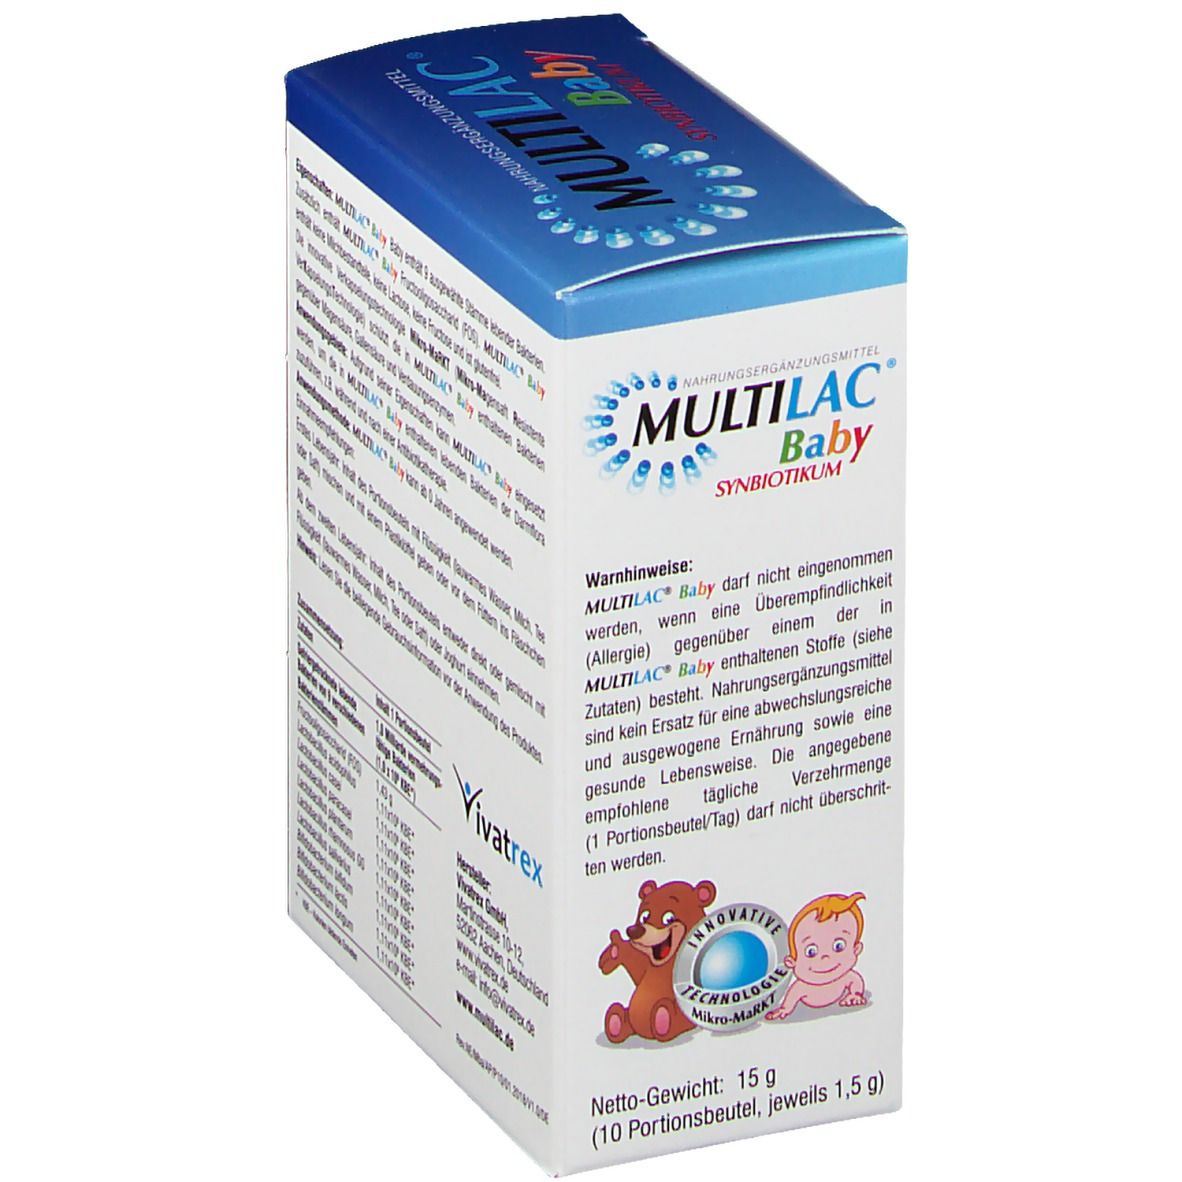 MULTILAC® Baby Synbiotikum